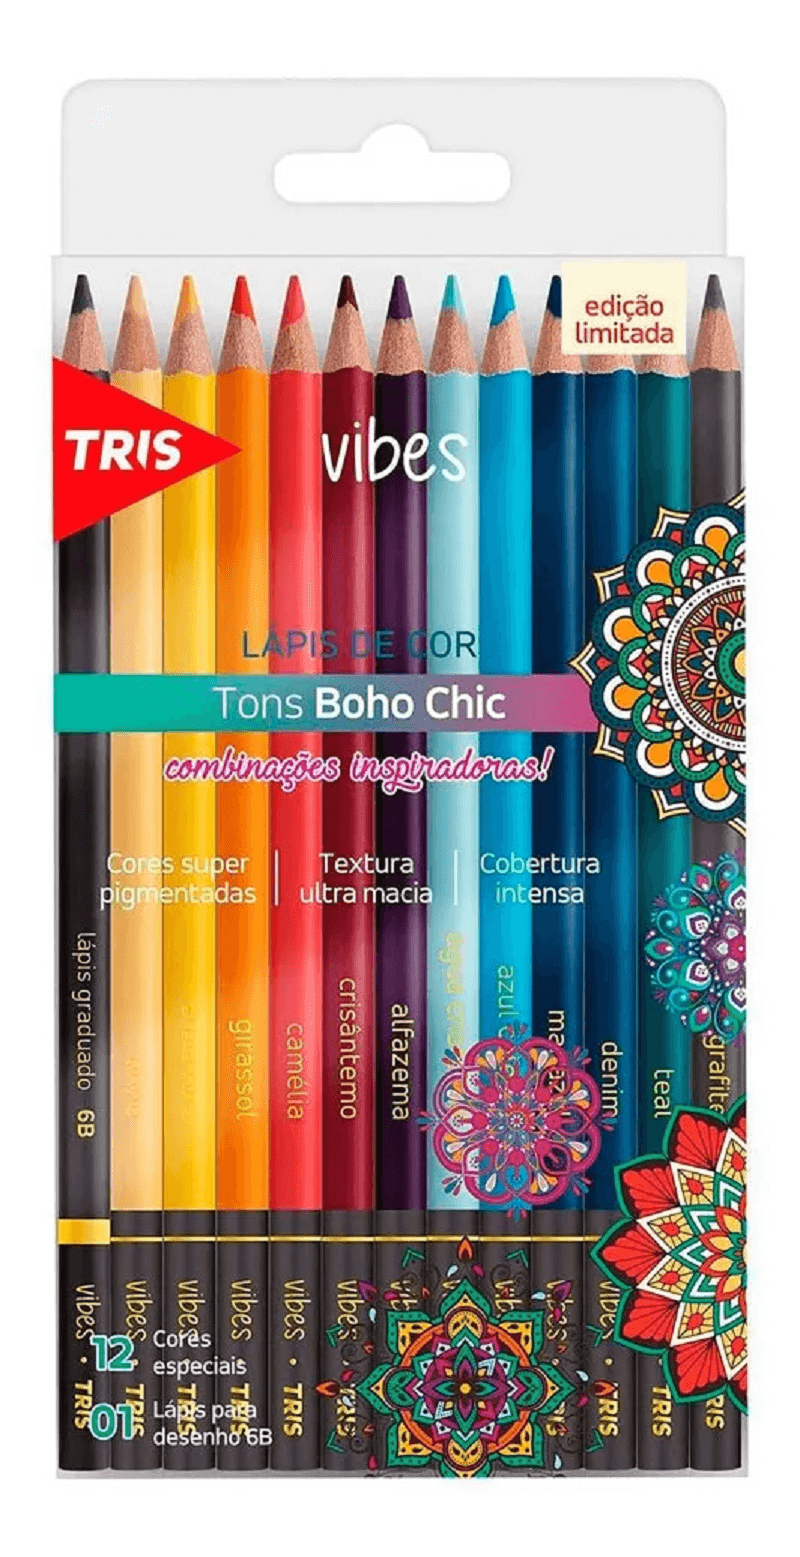 Lápis de Cor Tons Boho Chic 12 Cores + 1 6B 6076 - Tris